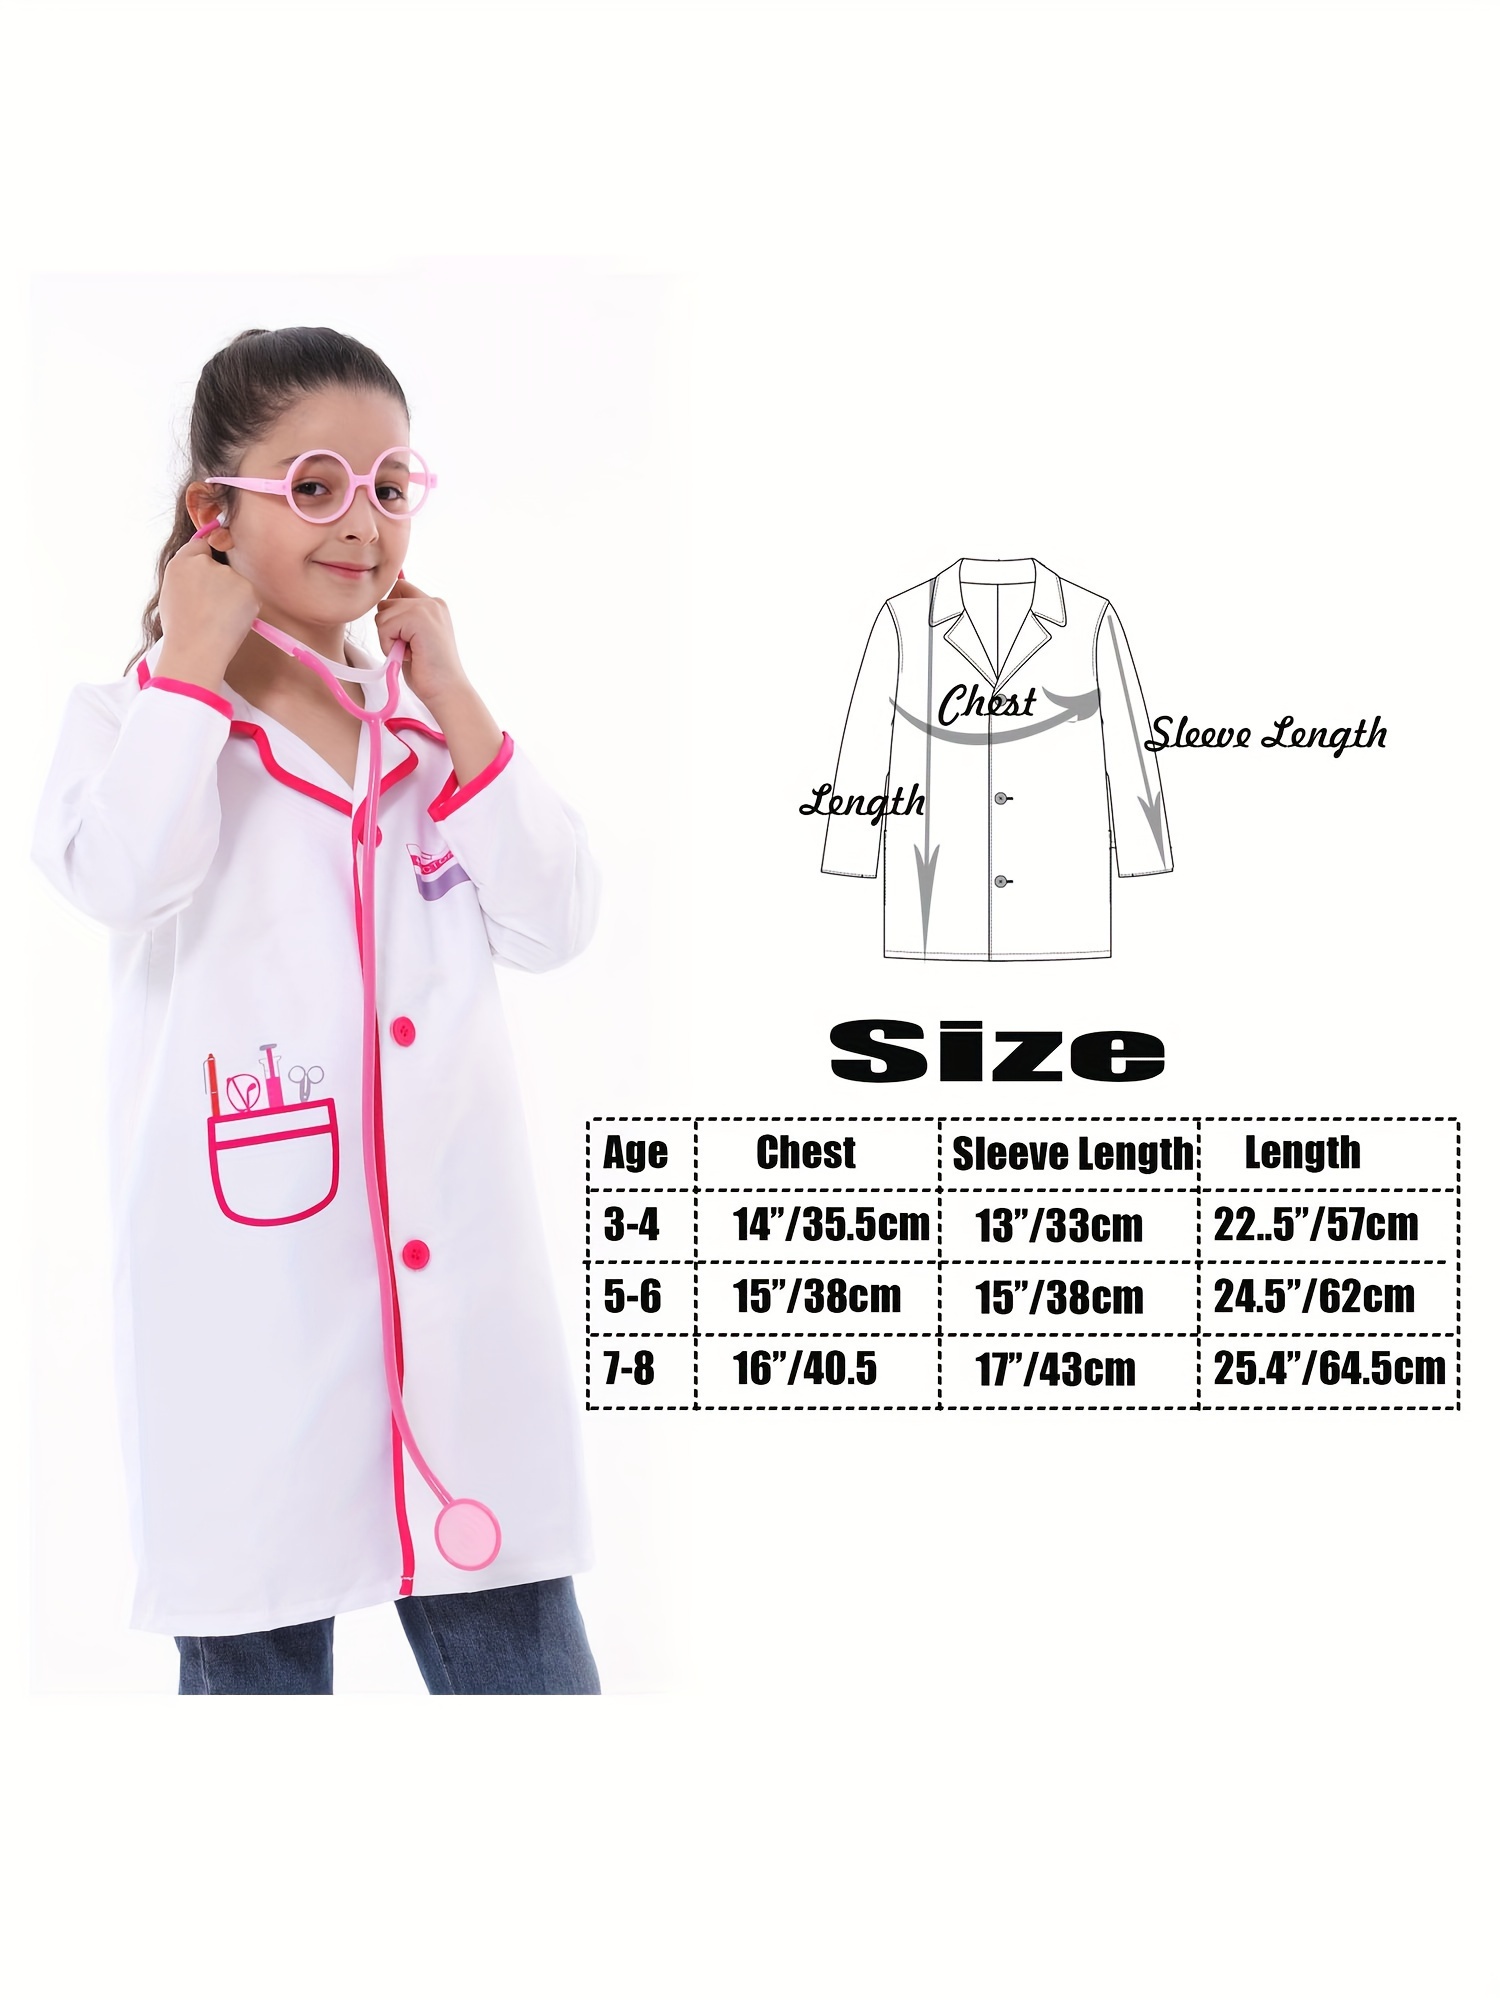 Japanese Women Nurse uniform Suit Pink Cosplay costume Set